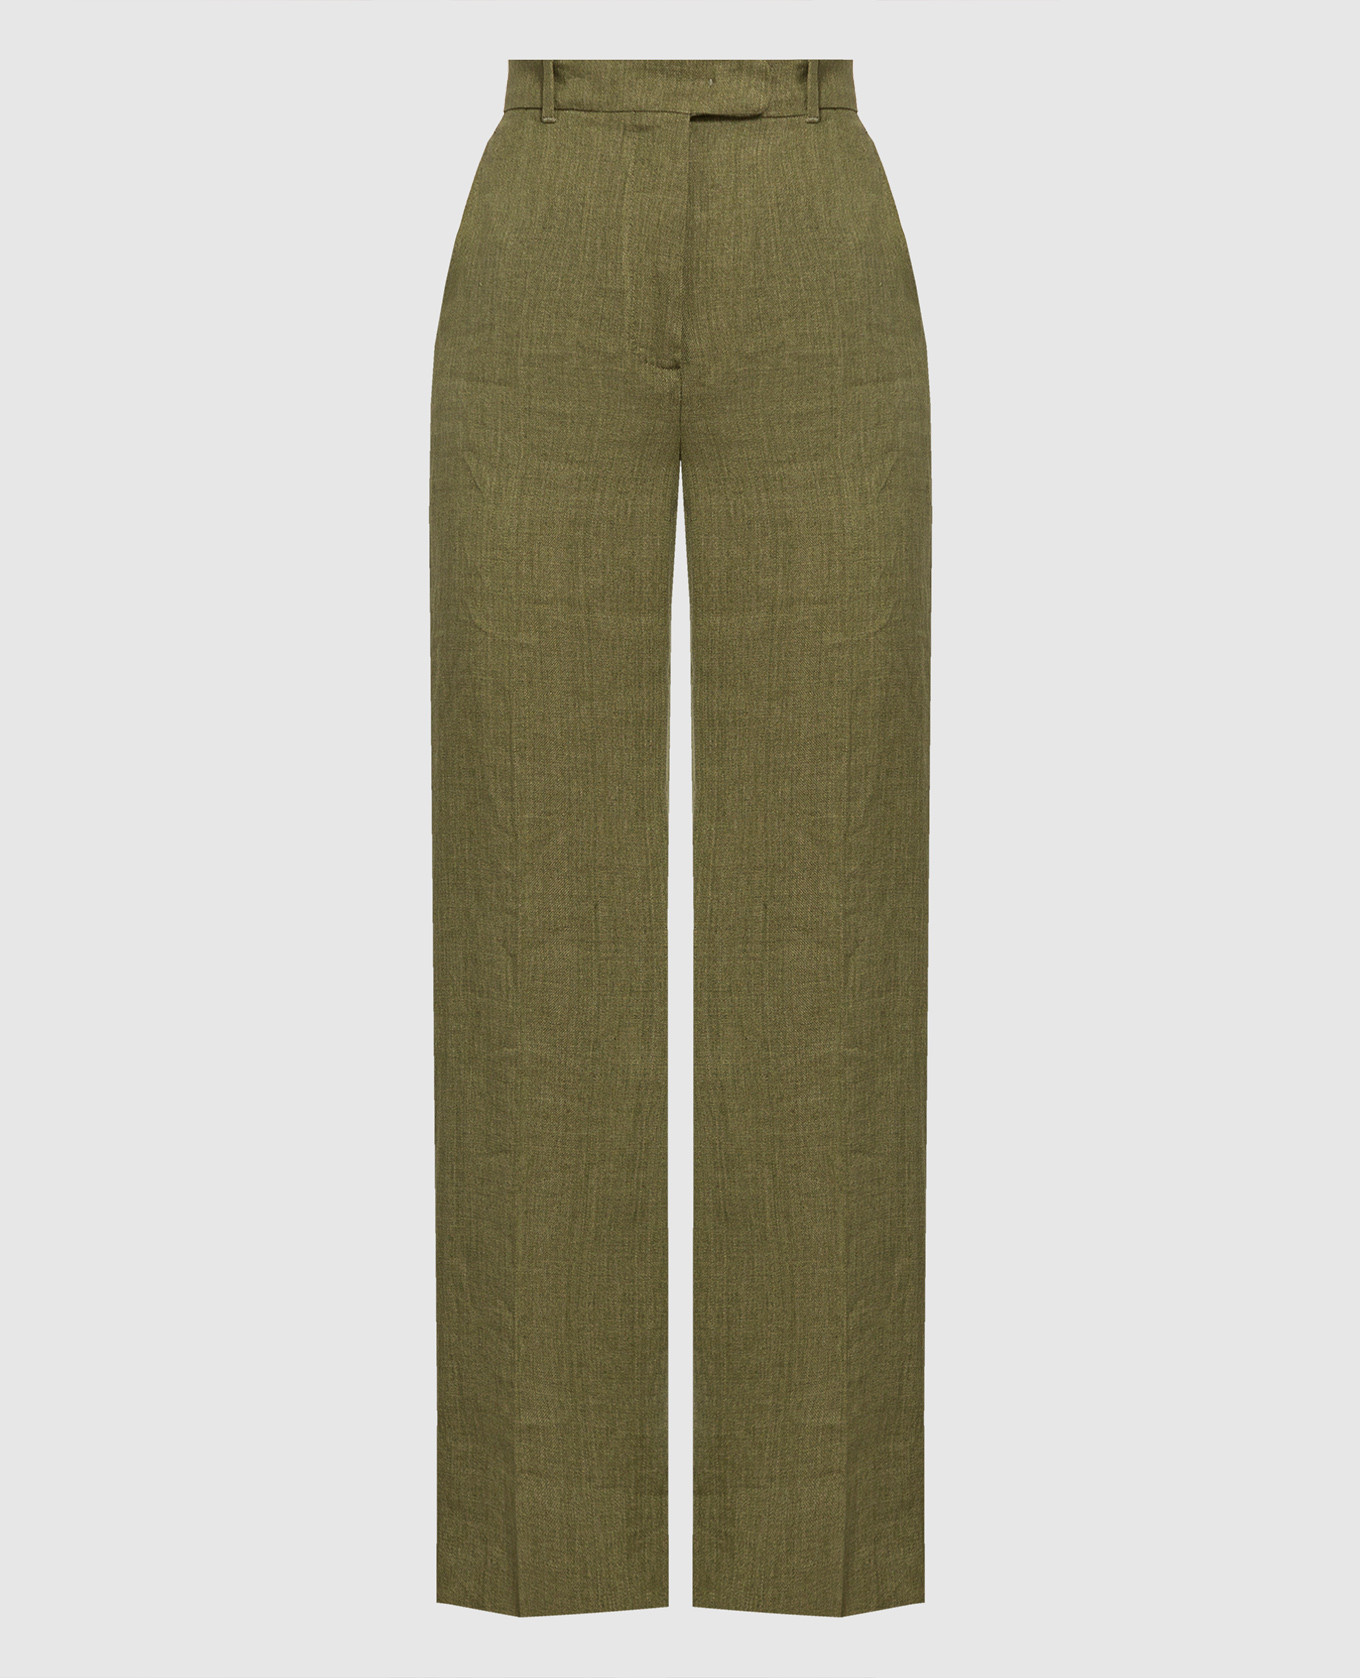 Alcano green linen trousers